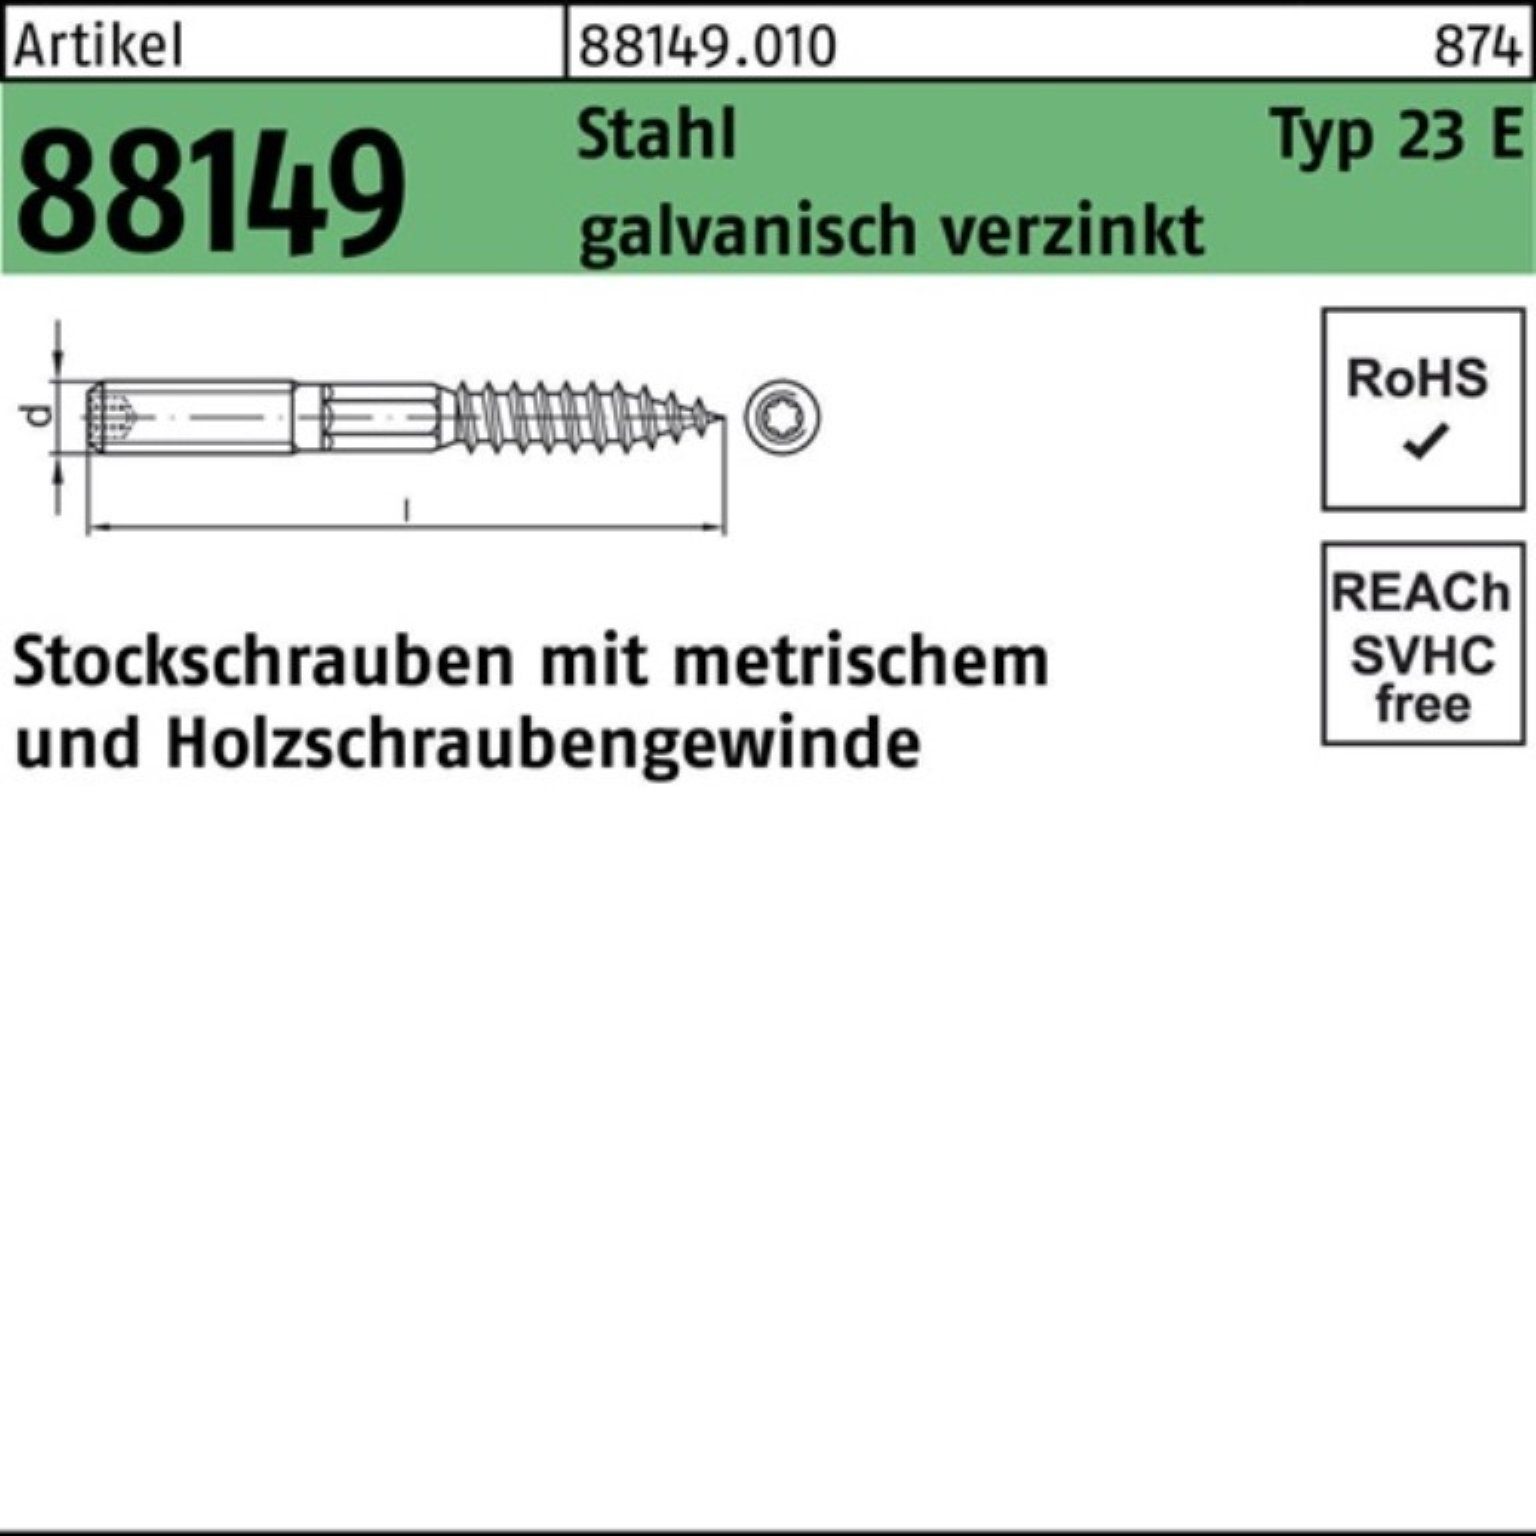 Typ Stockschraube R galv.verz. 88149 23 E Stahl 100 Reyher 100er M6x Pack Stockschraube 60